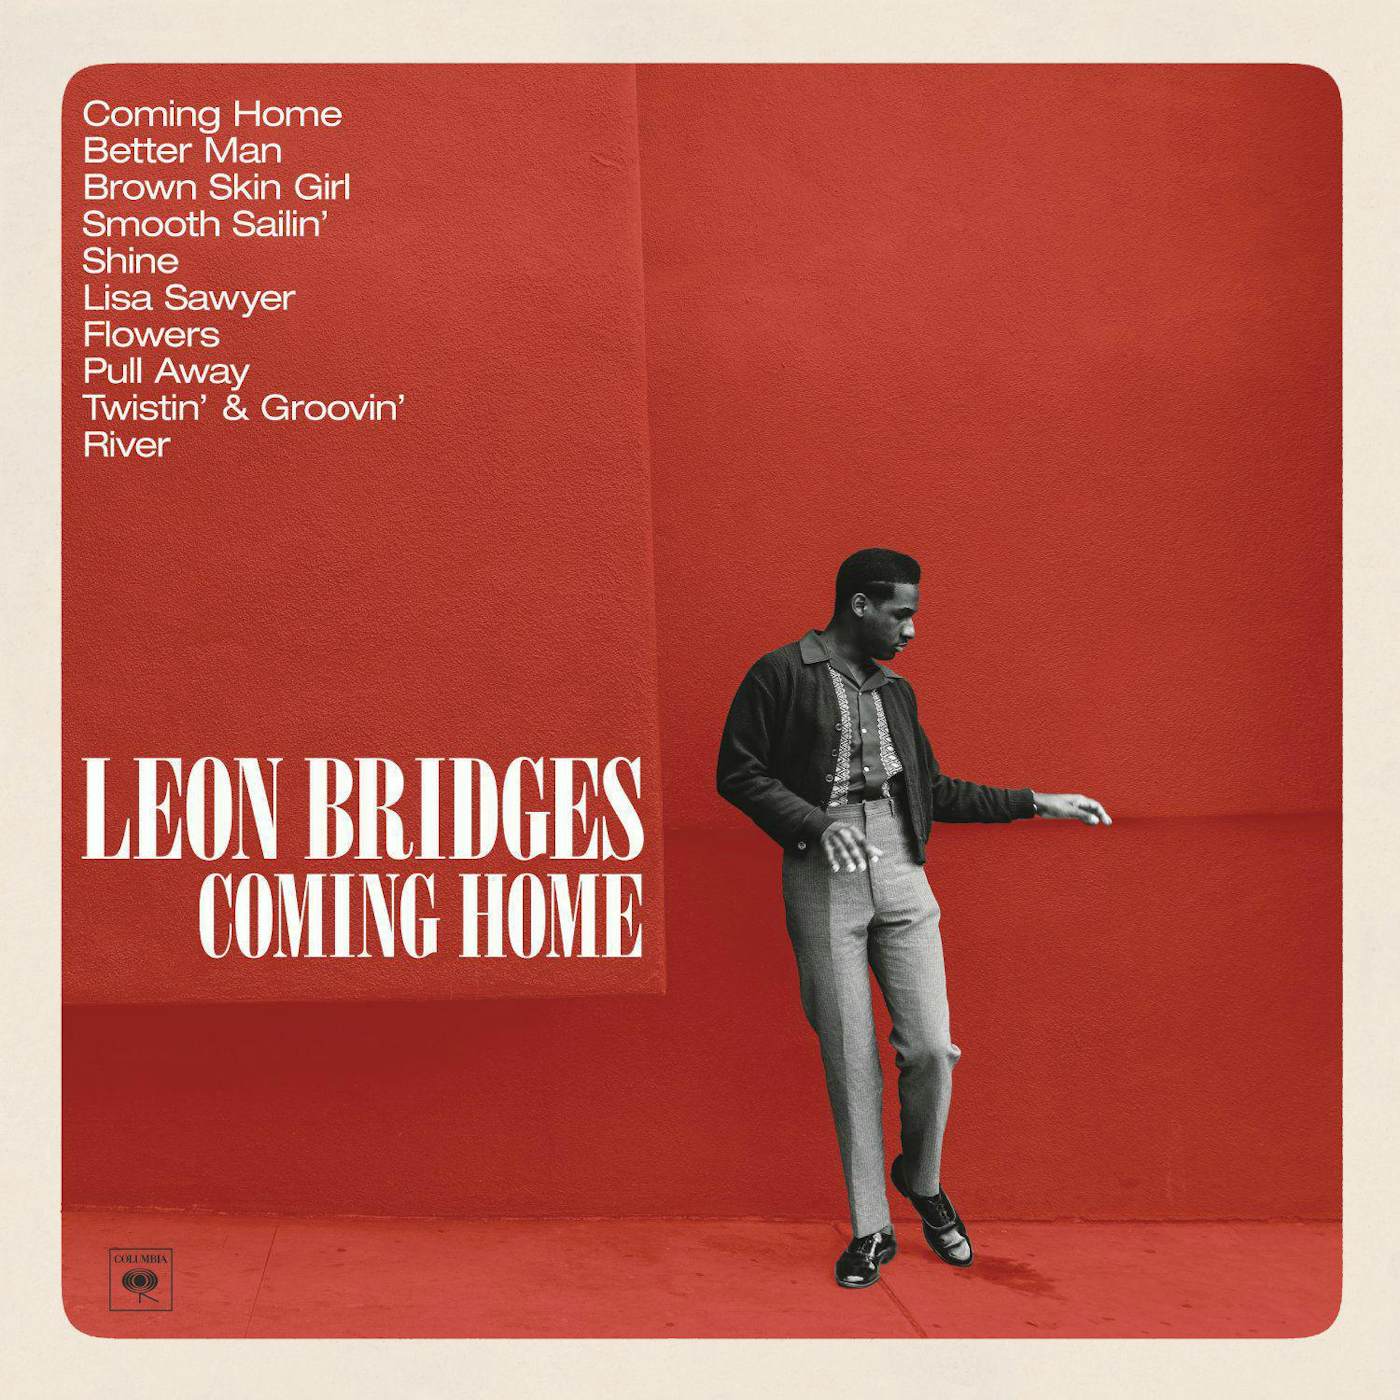 Leon Bridges Coming Home (180G/DL Card) Vinyl Record